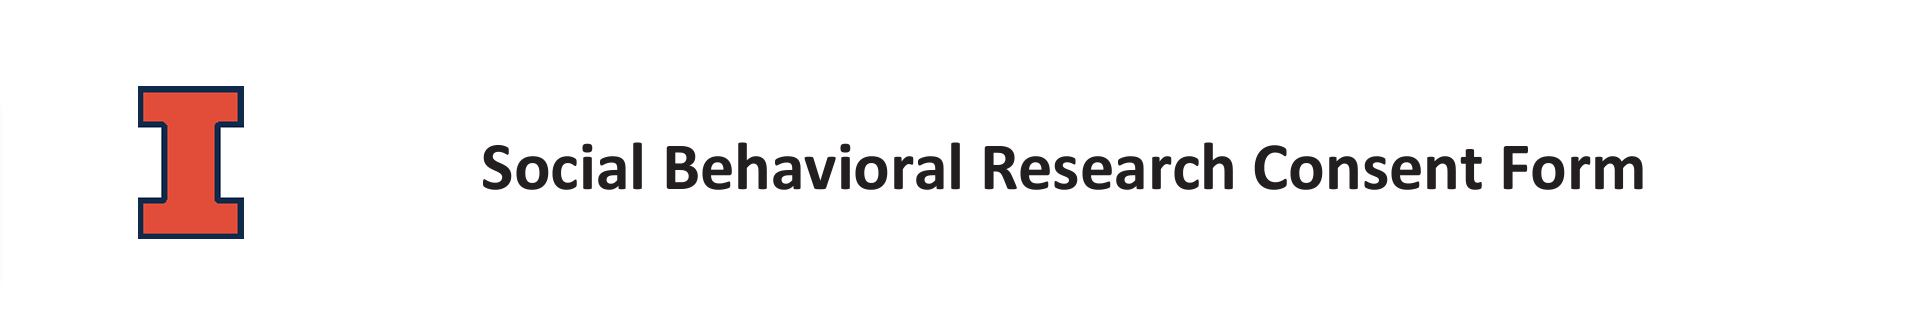 social behavioral research consent form logo